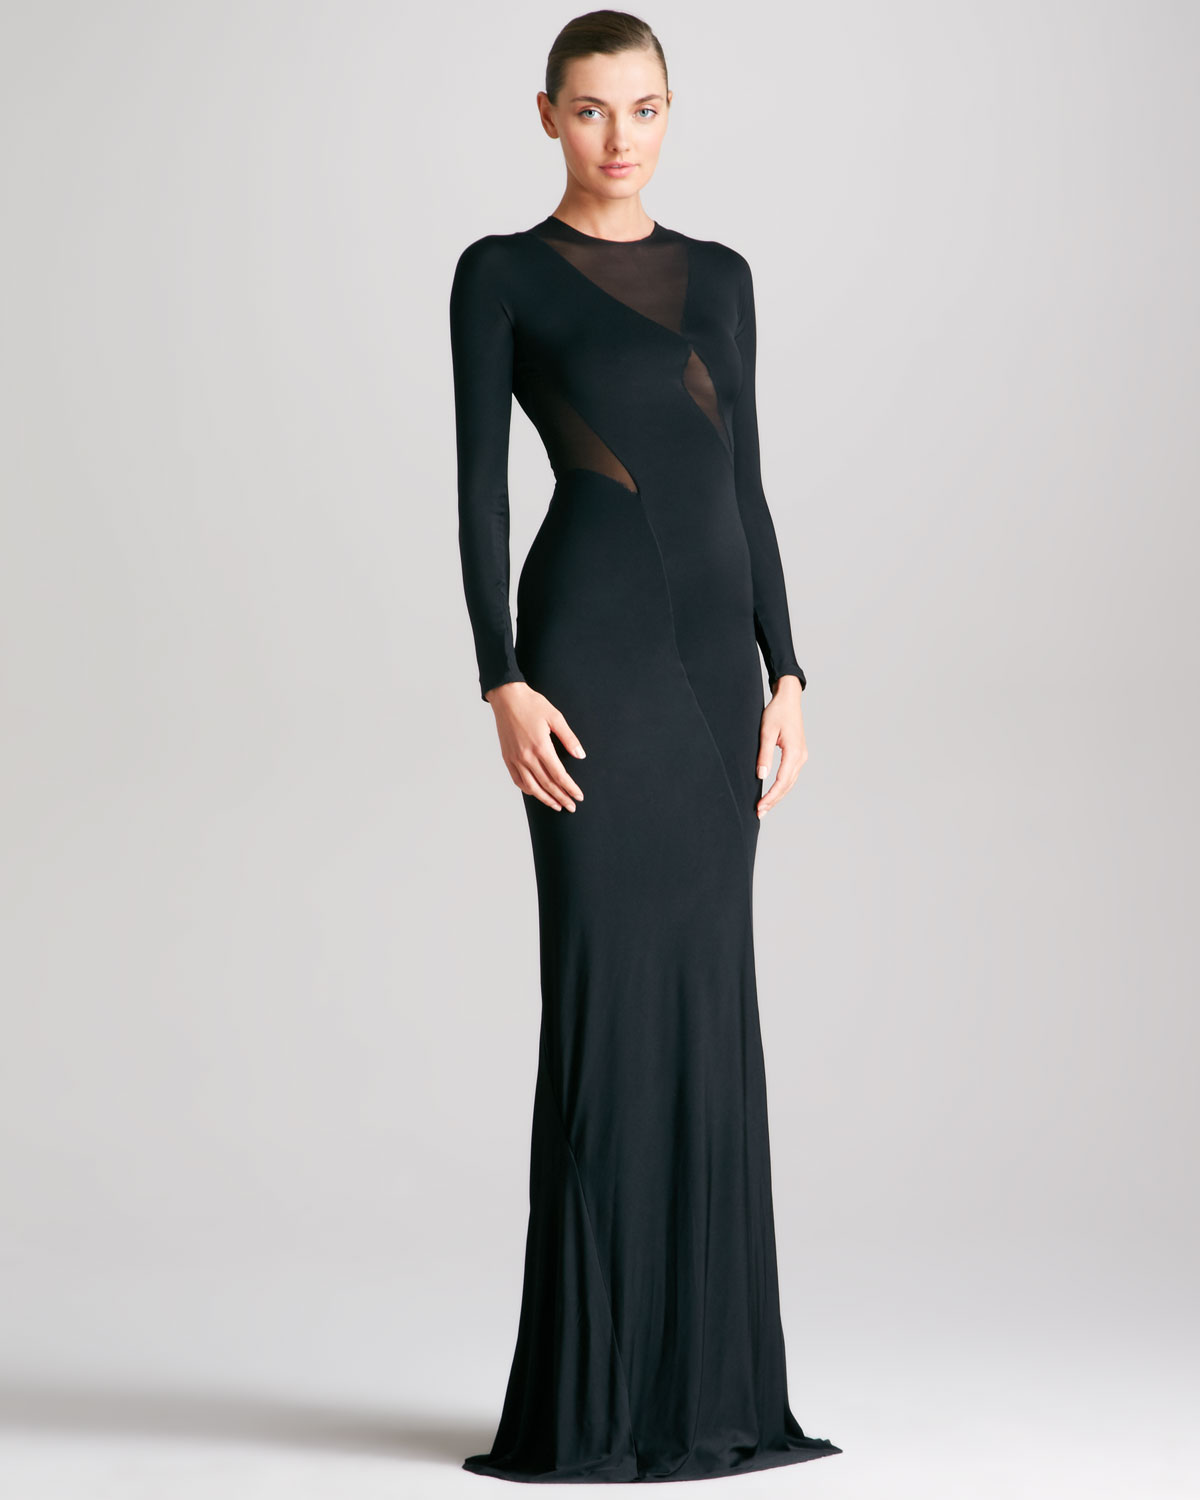 Donna karan new york Sheer Inset Long Sleeve Evening Gown in Black | Lyst